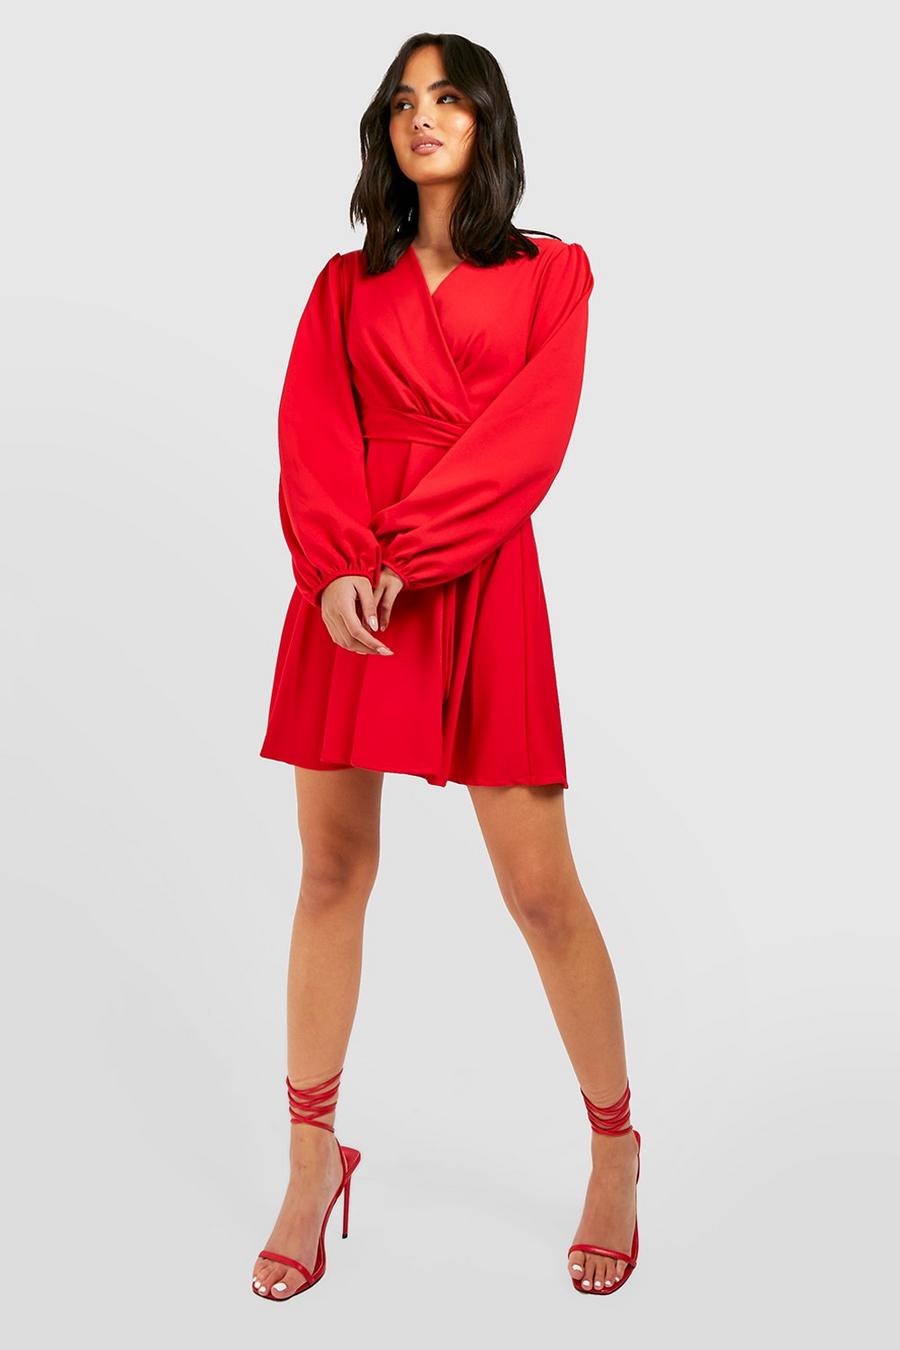 Red שמלת סקייטר מעטפת עם שרוולים תפוחים